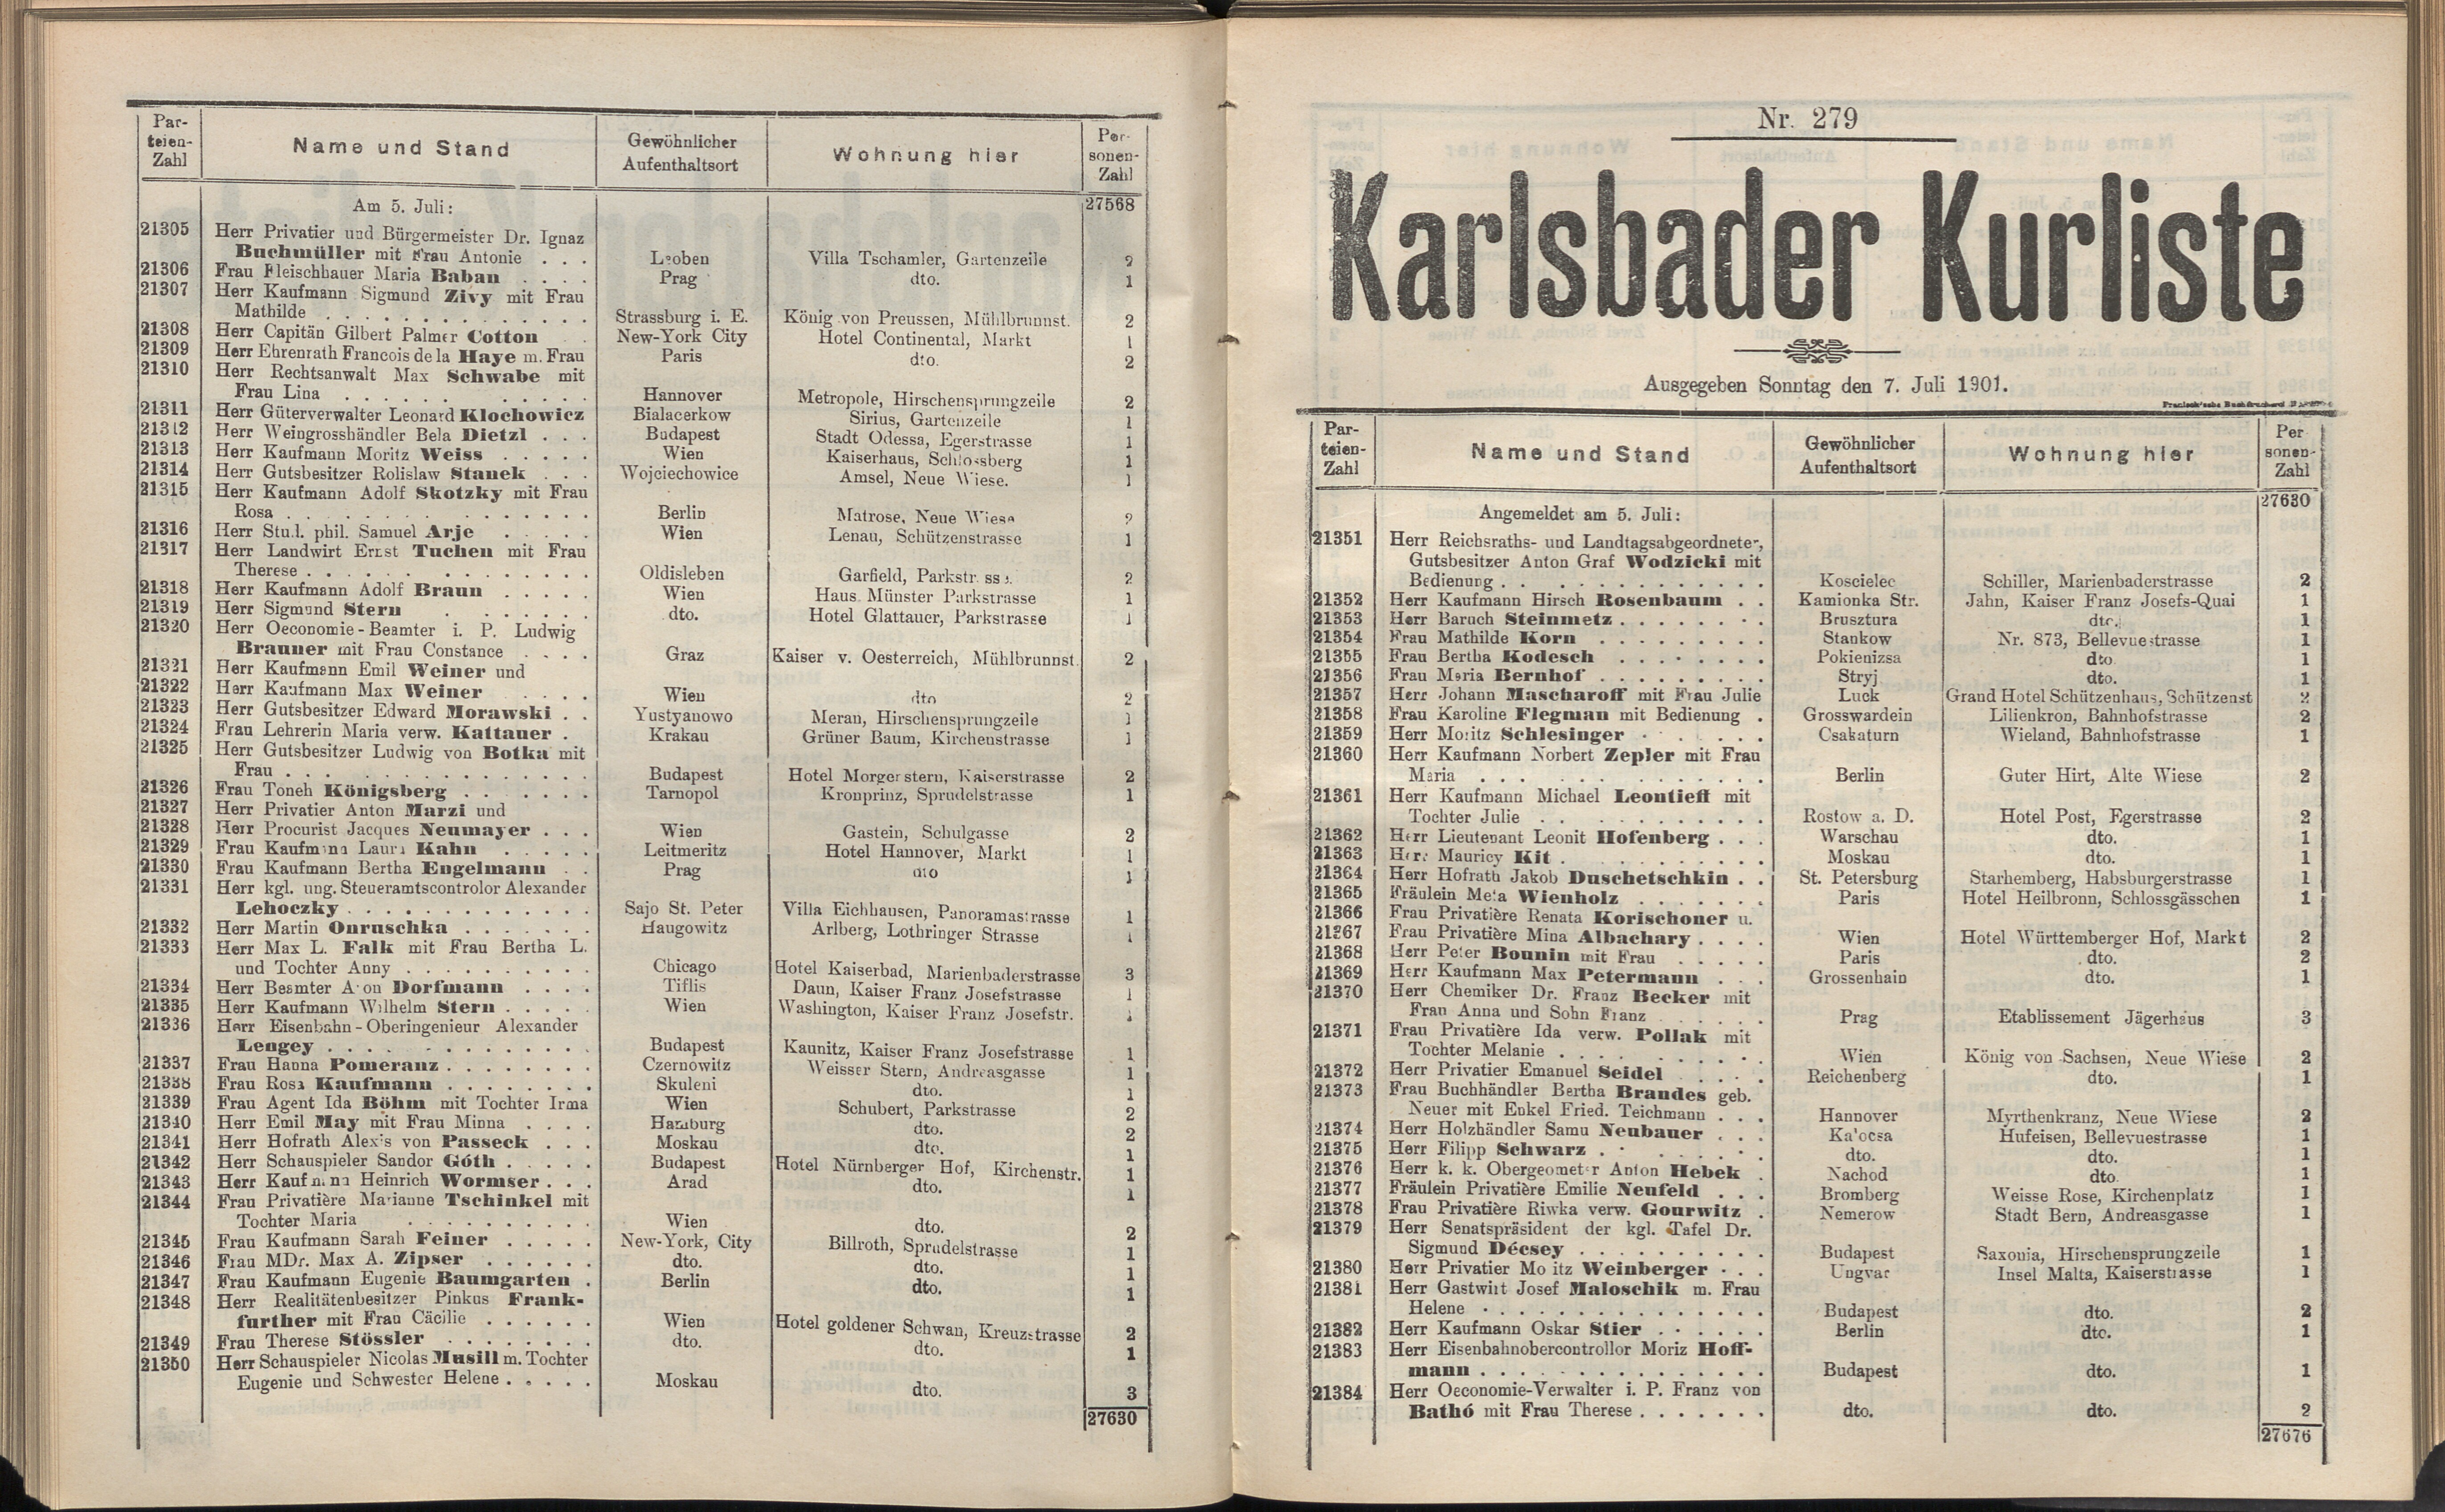 305. soap-kv_knihovna_karlsbader-kurliste-1901_3070